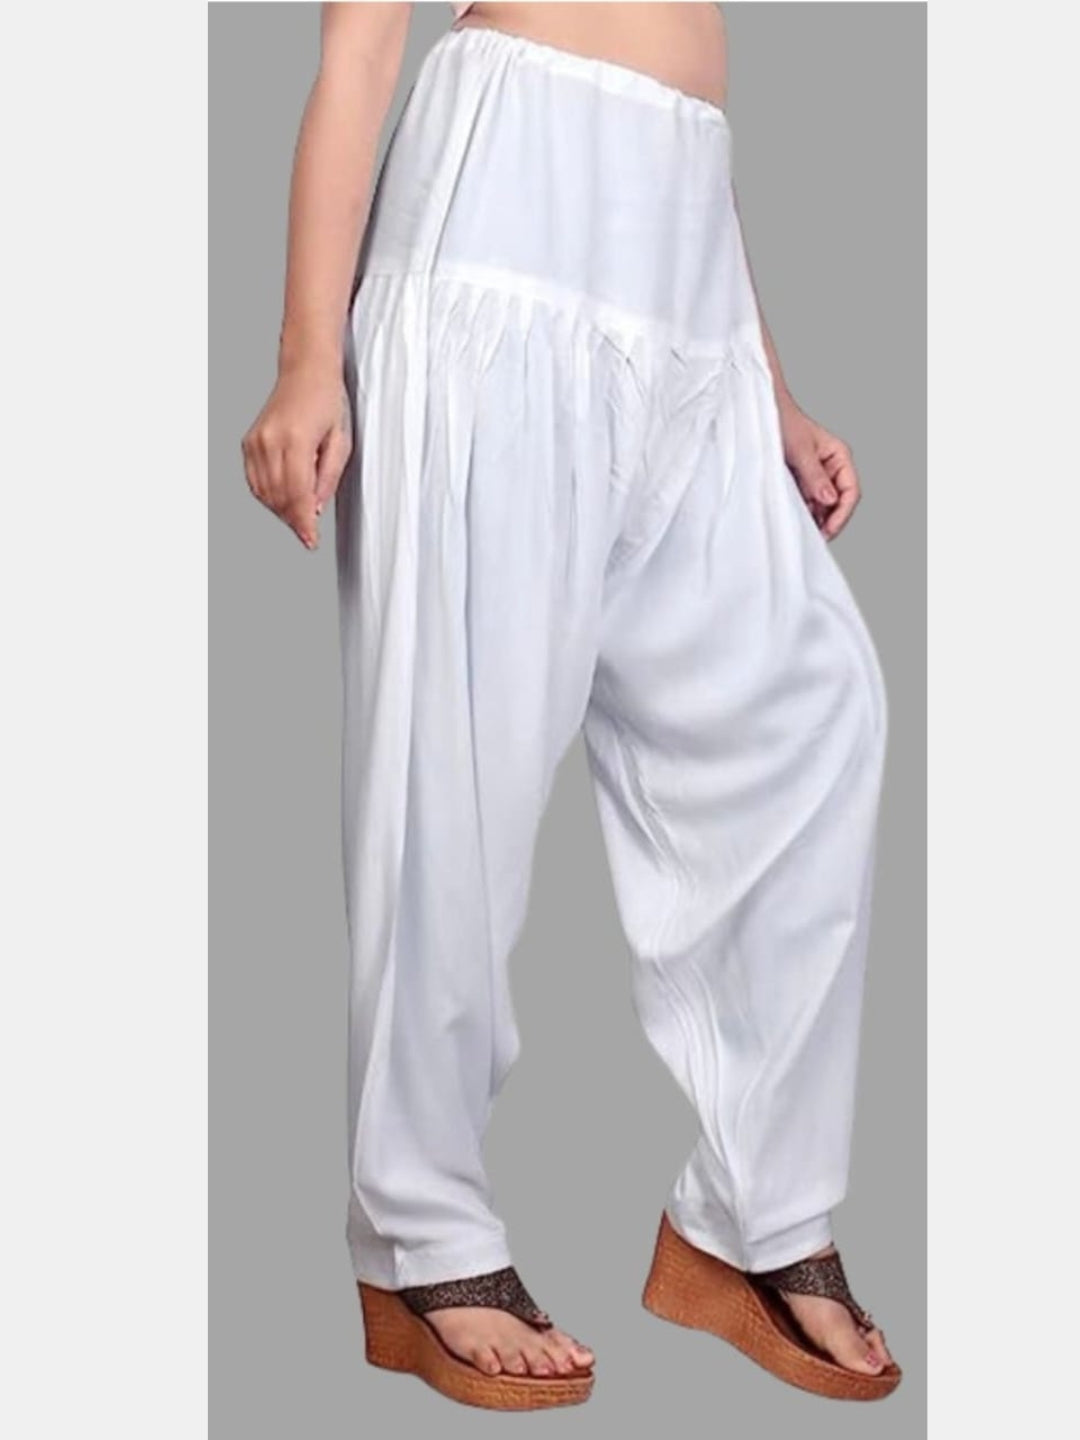 Navy Blue - Pure Cotton Solid Color Patiala Pants for women